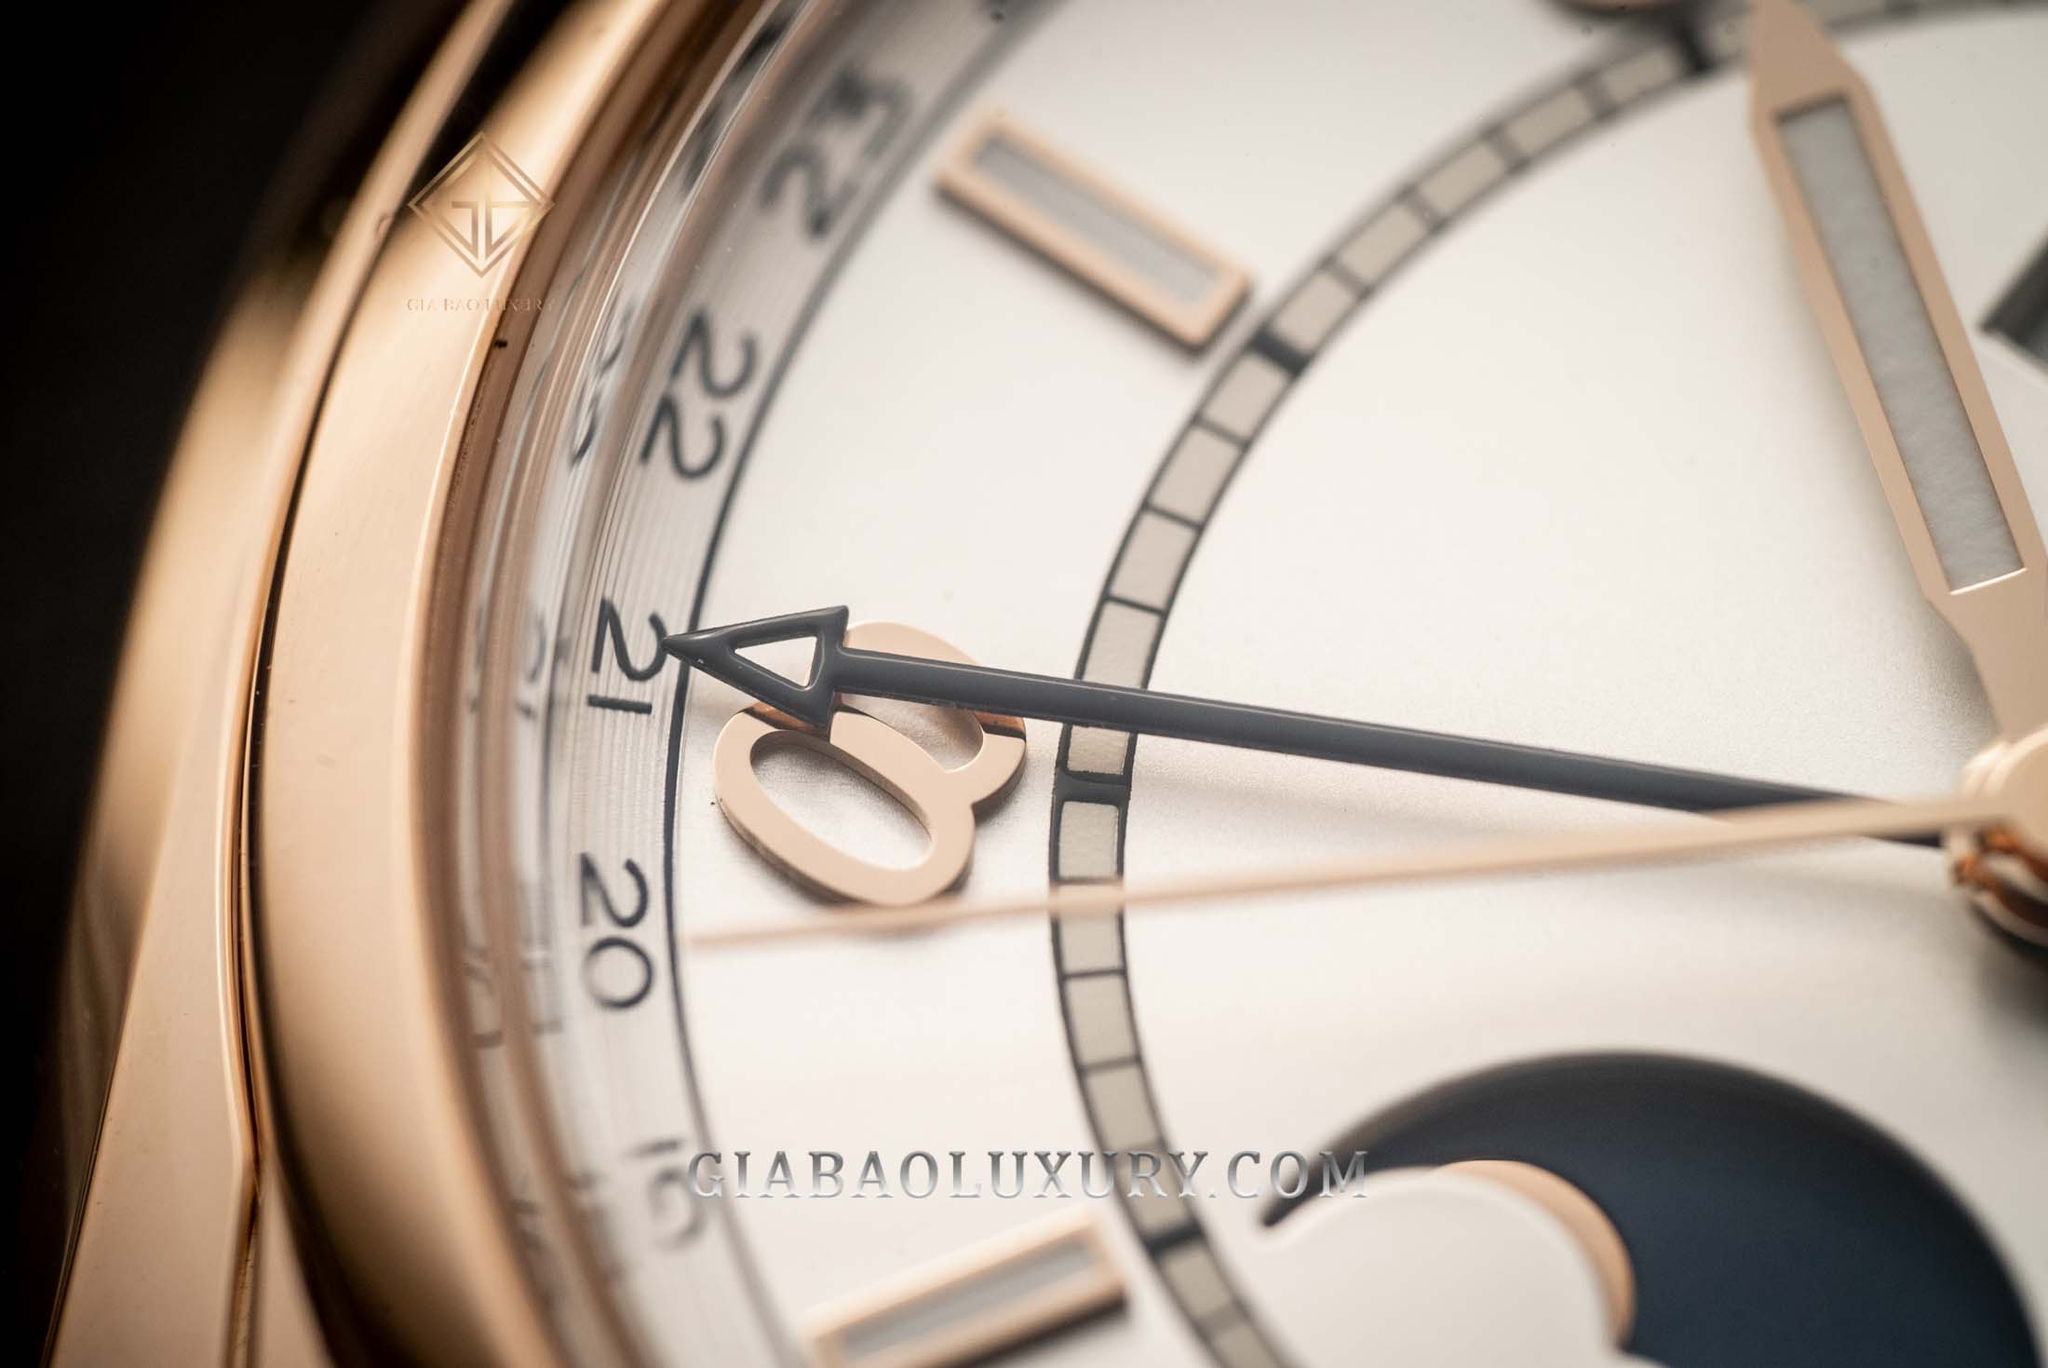 Review đồng hồ Vacheron Constantin FiftySix Complete Calendar 4000E/000R-B438